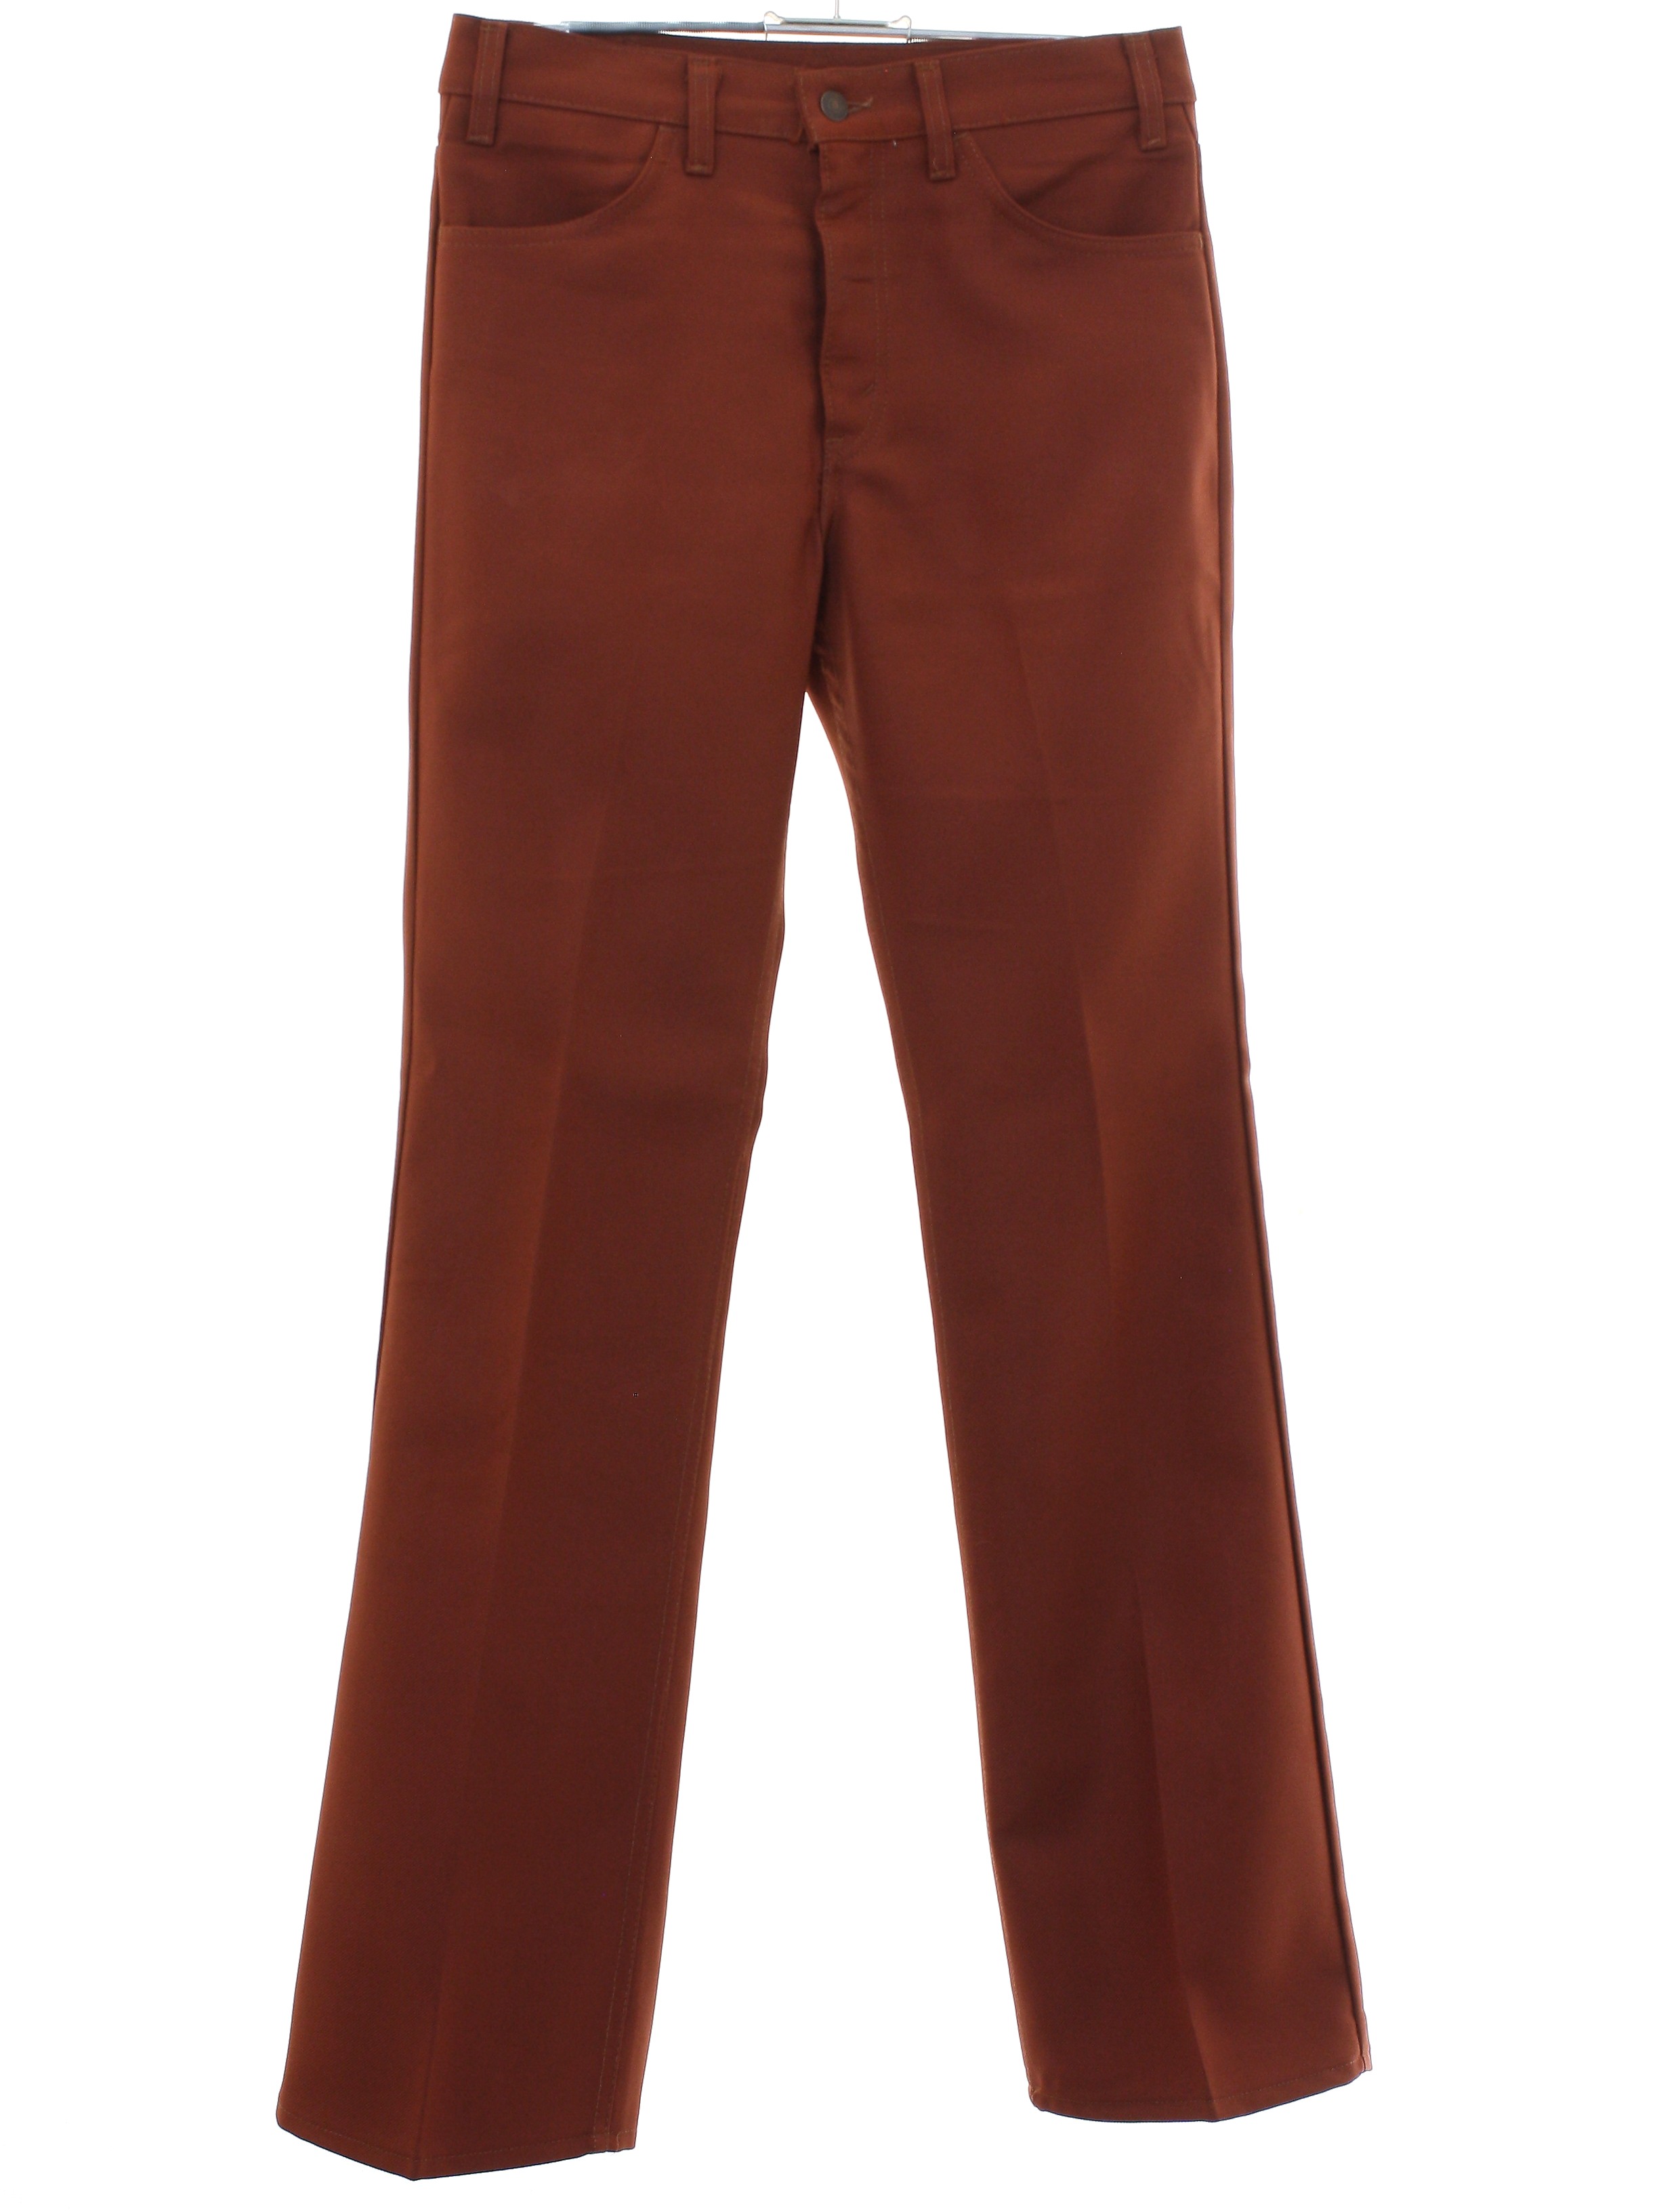 Seventies Levis Pants: 70s -Levis- Mens copper brown solid colored ...